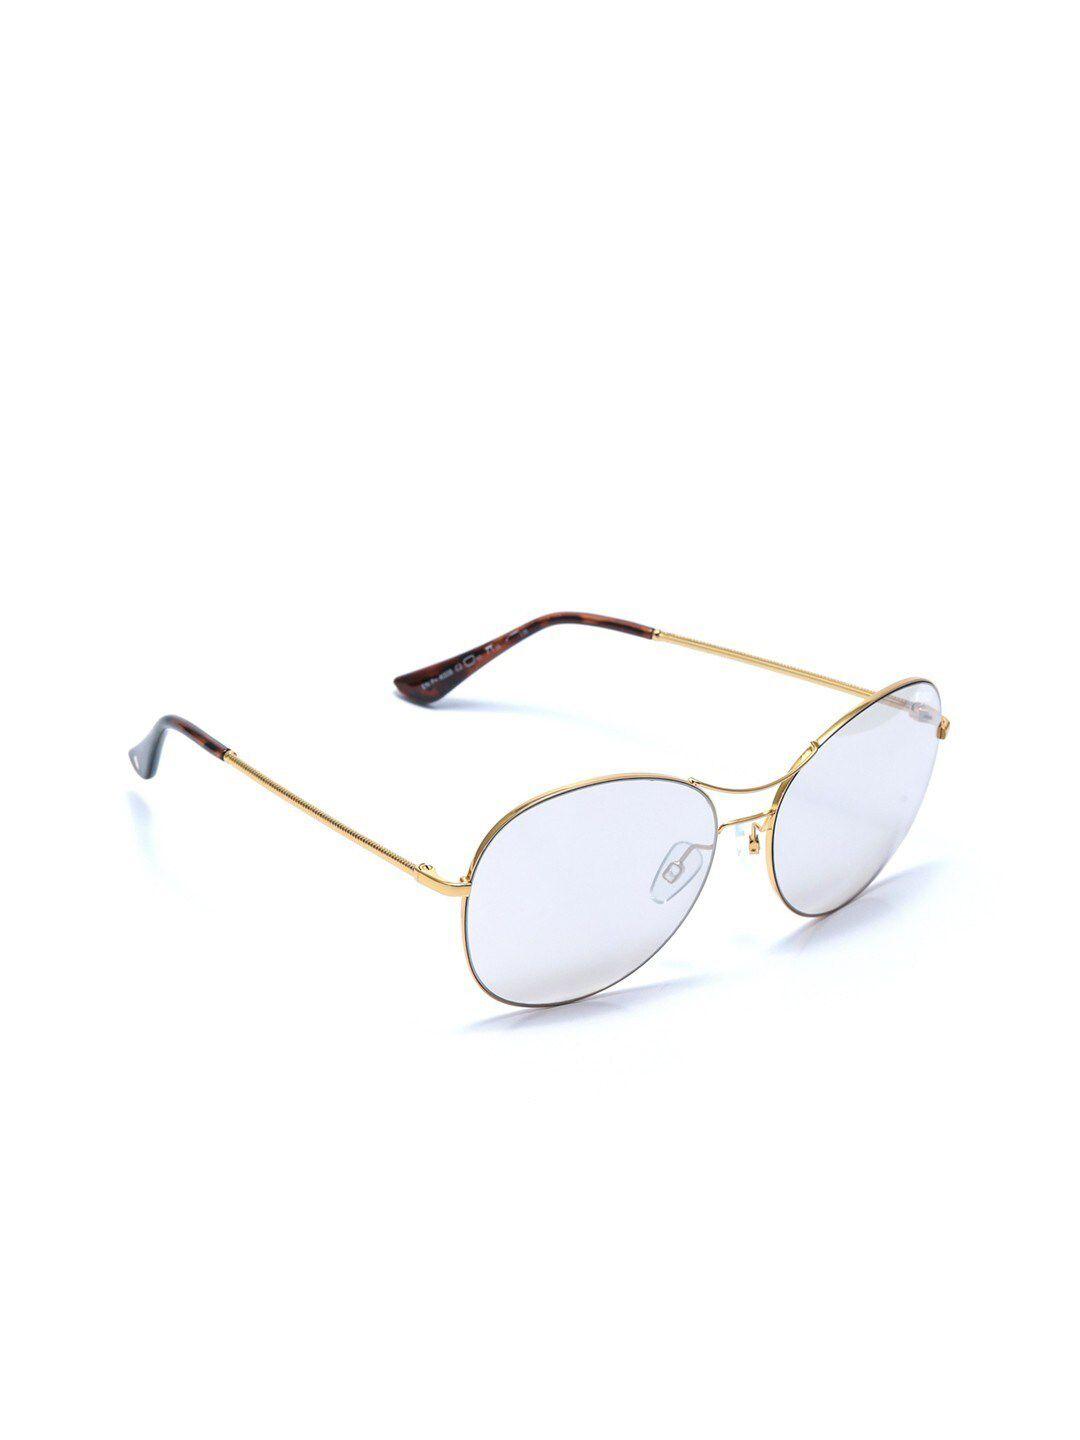 enrico women silver-toned lens & gold-toned oval sunglasses en p 4008 c2